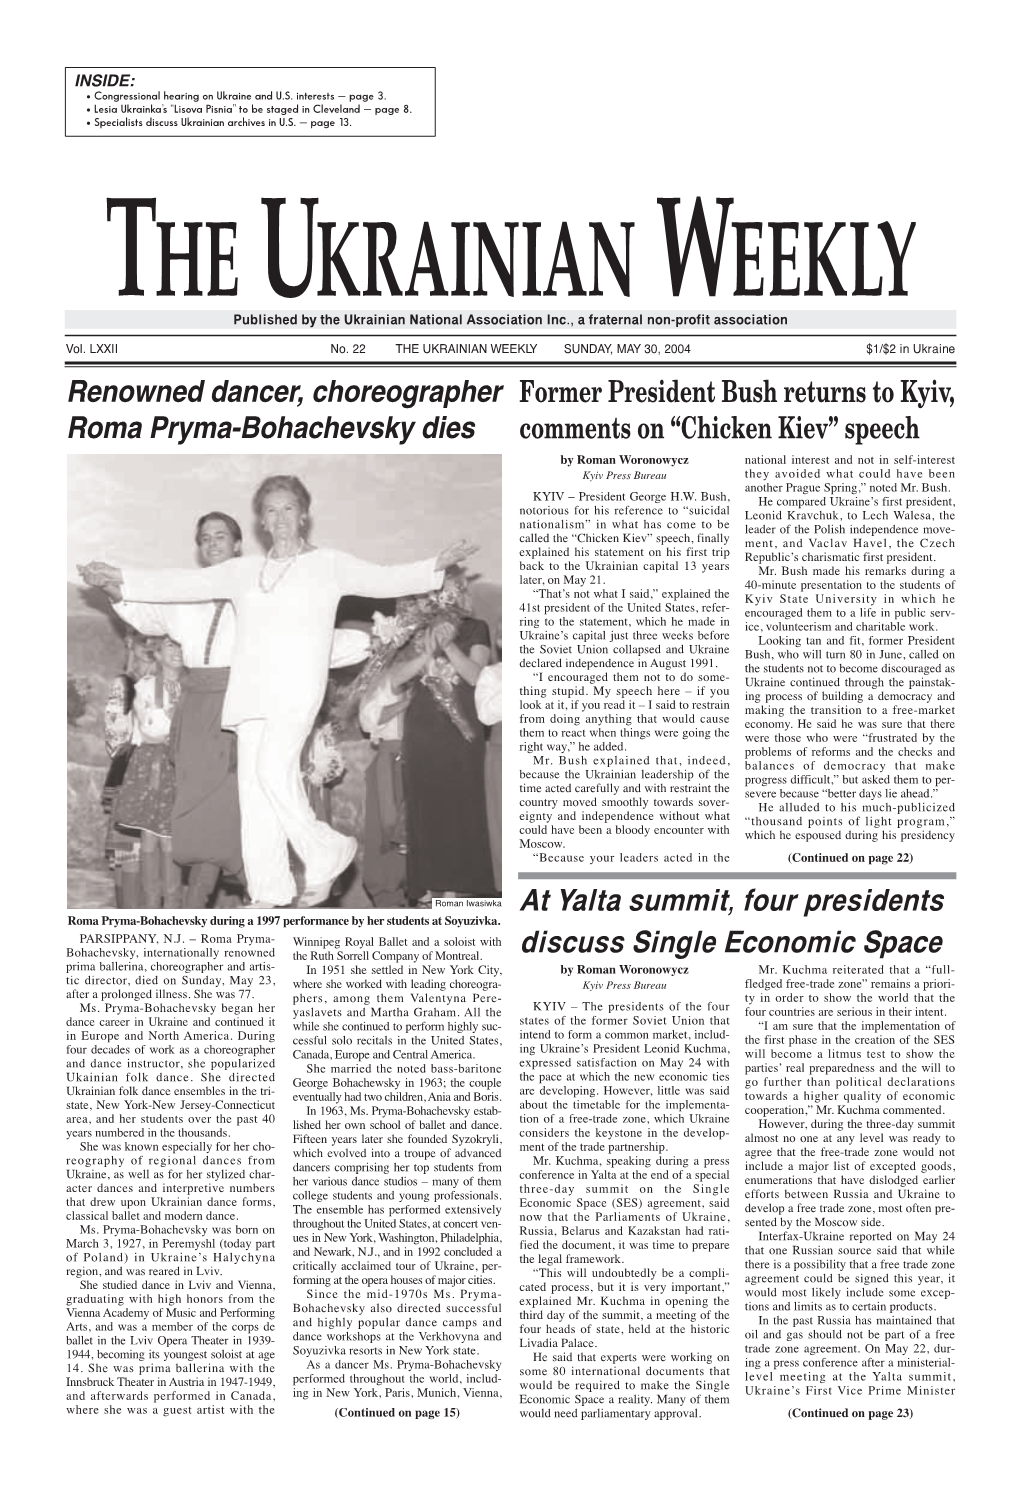 The Ukrainian Weekly 2004, No.22